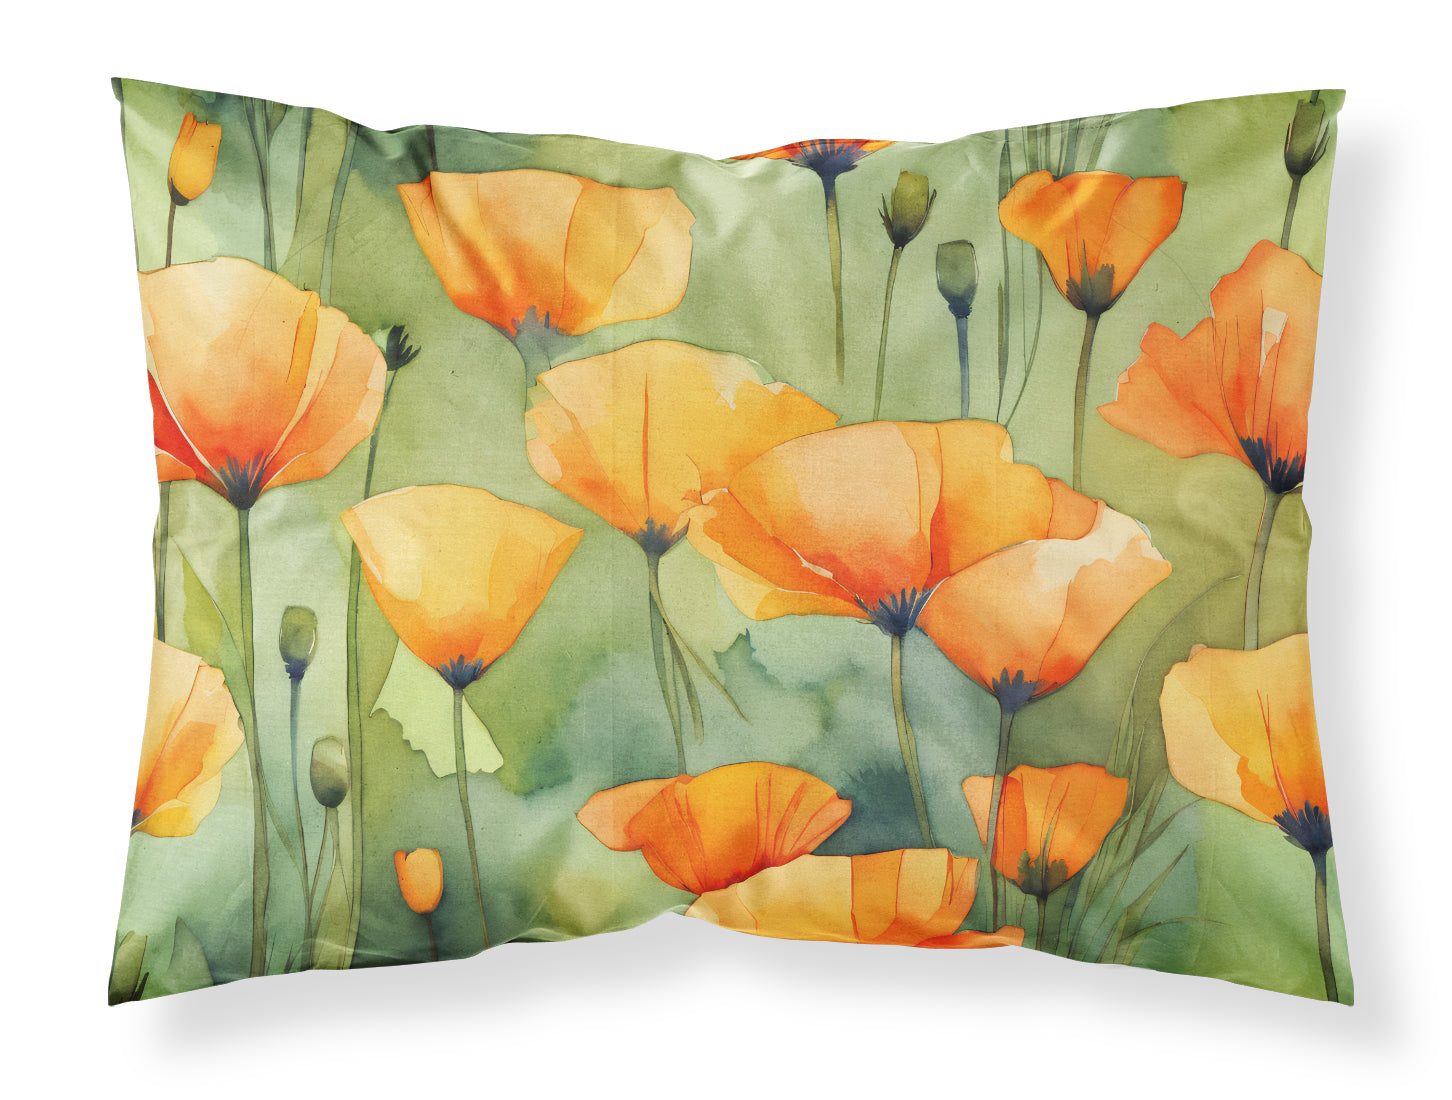 Buy this California California Poppies in Watercolor Fabric Standard Pillowcase